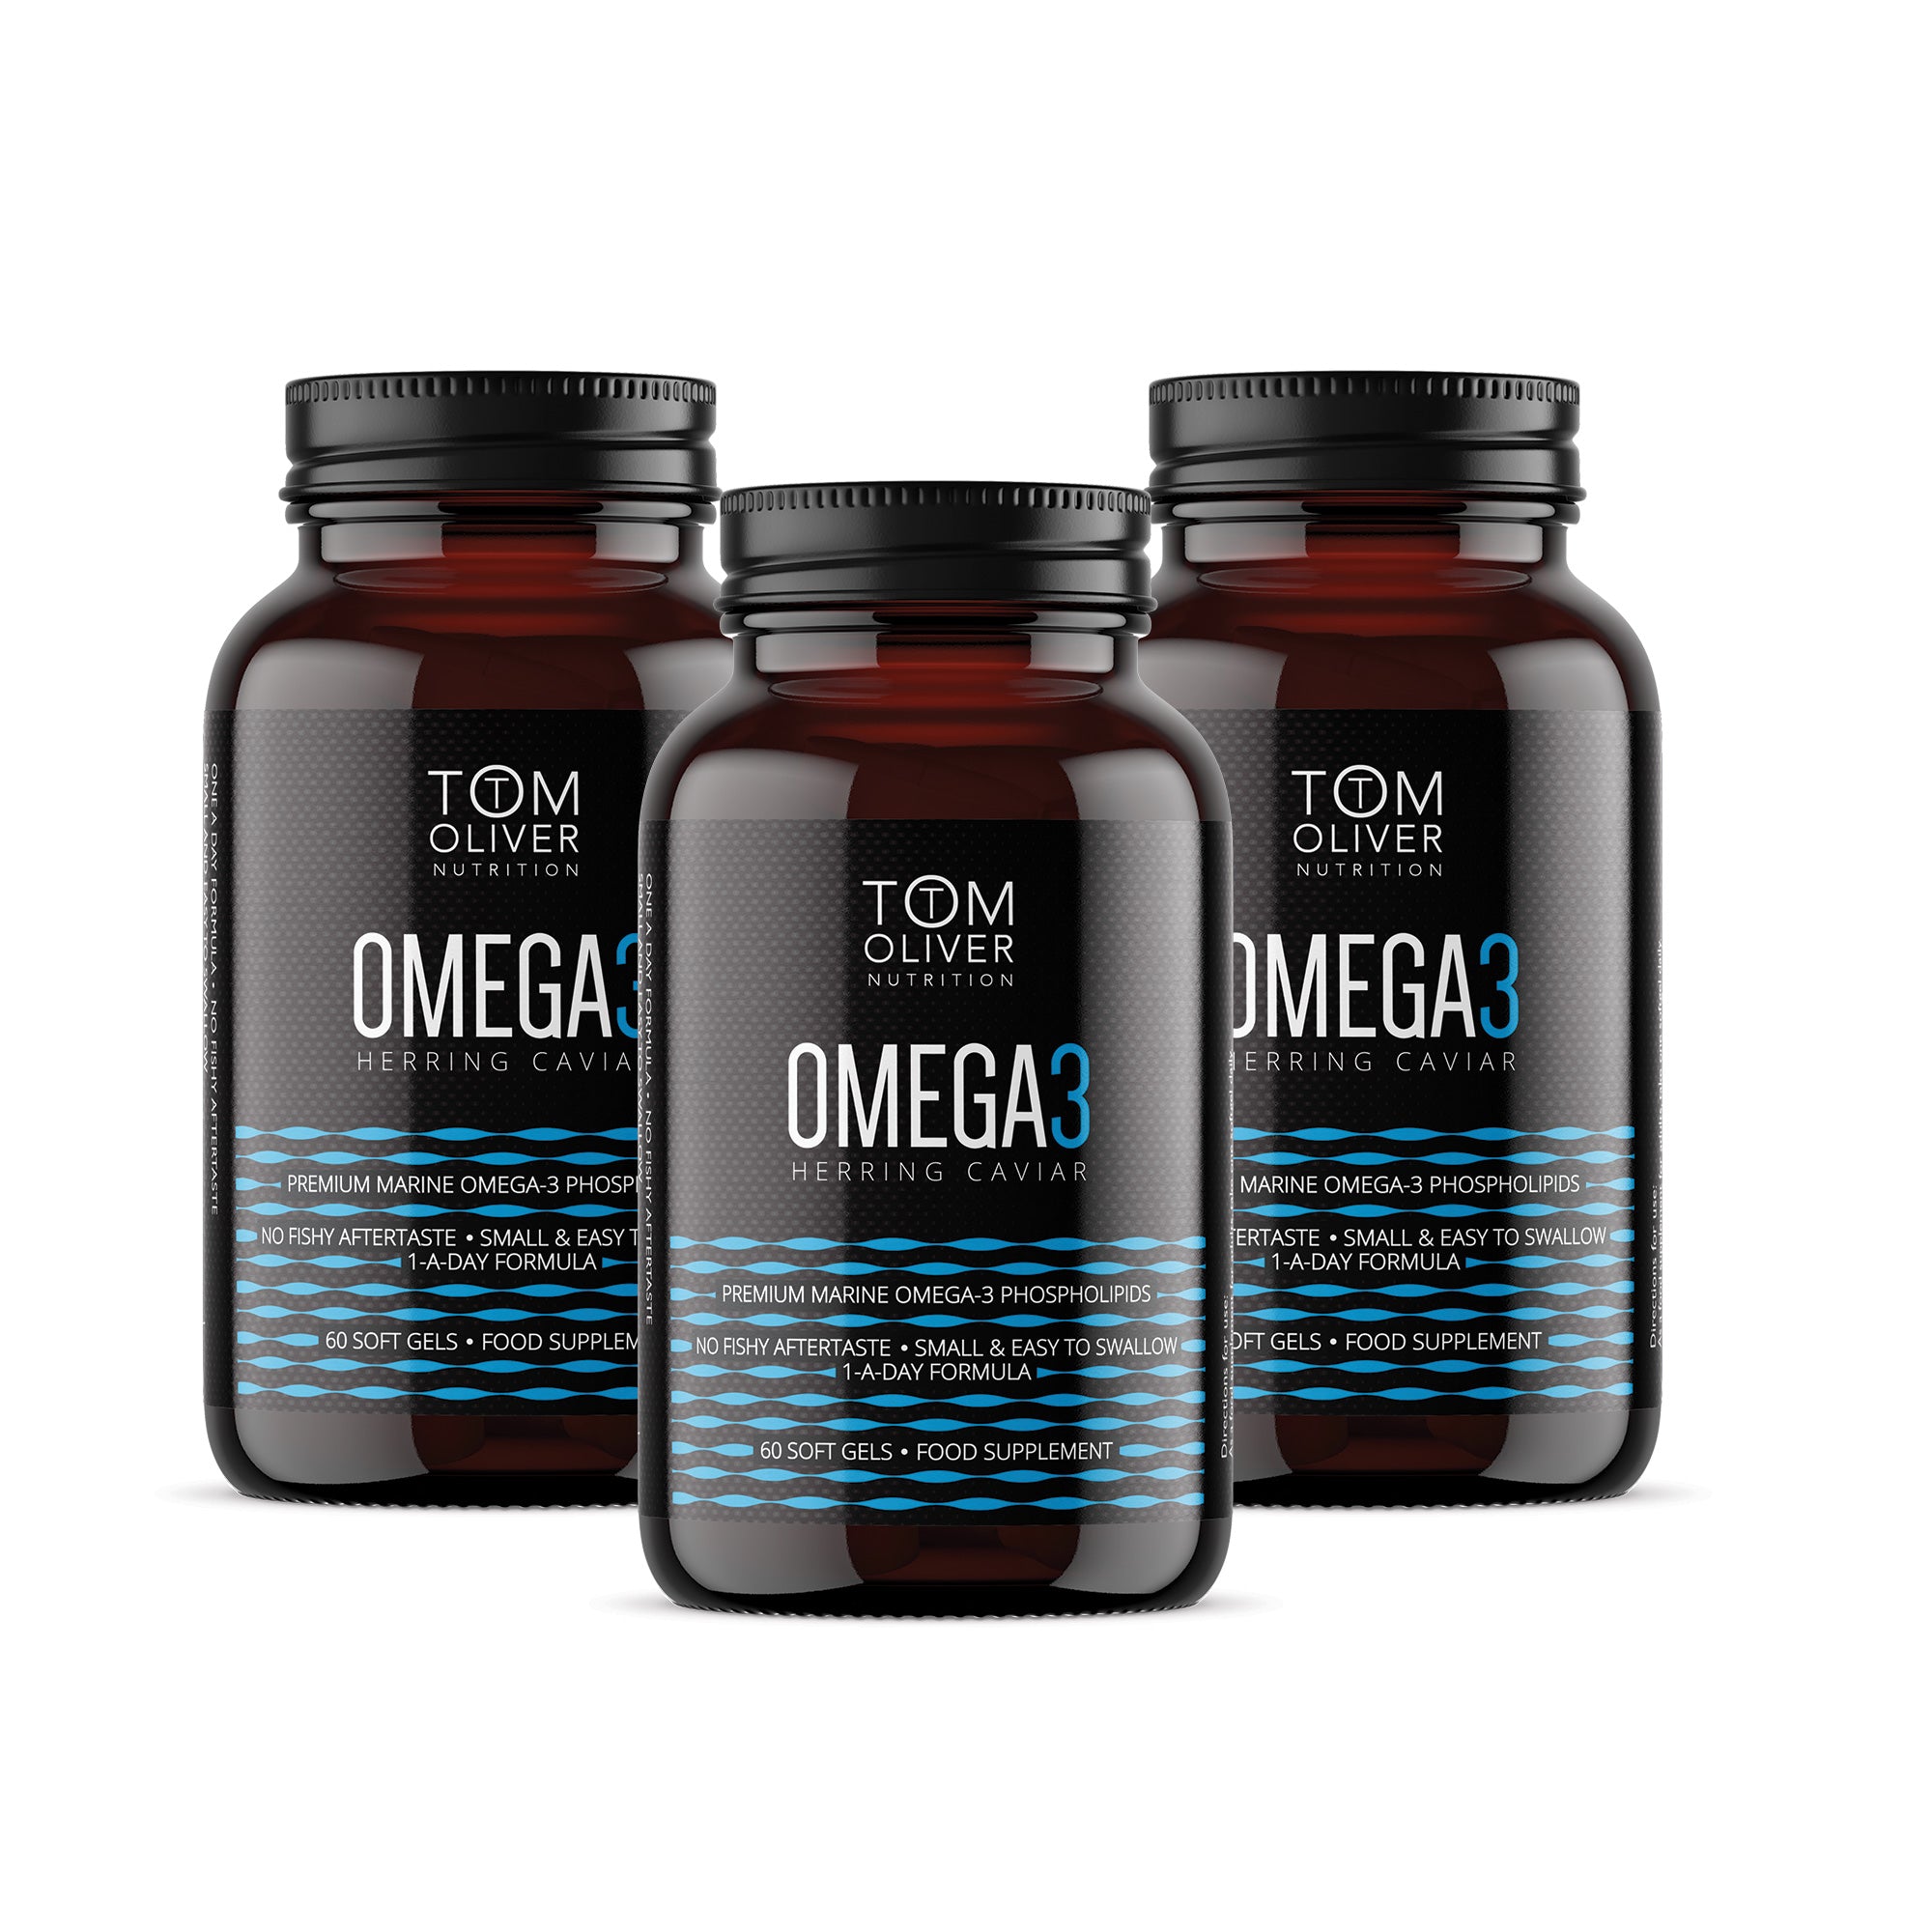 El paquete Omega 3 Herring Caviar Oferta (3 botellas)